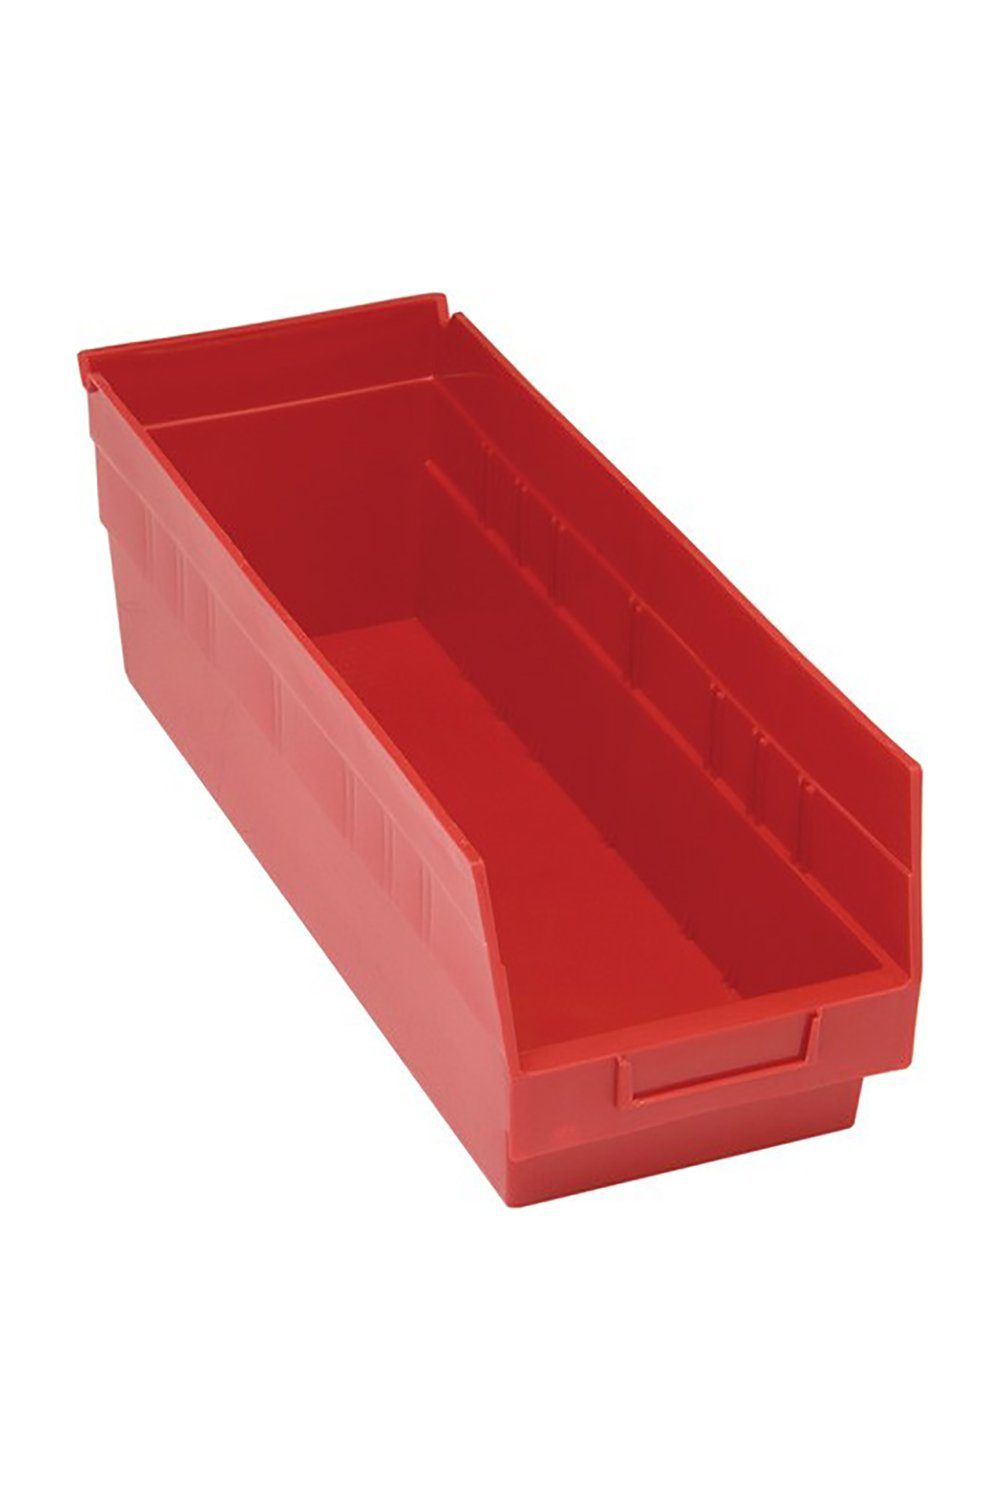 Shelf Bin for 24"D Shelves Bins & Containers Acart 17-7/8'' x 6-5/8'' x 6'' Red 